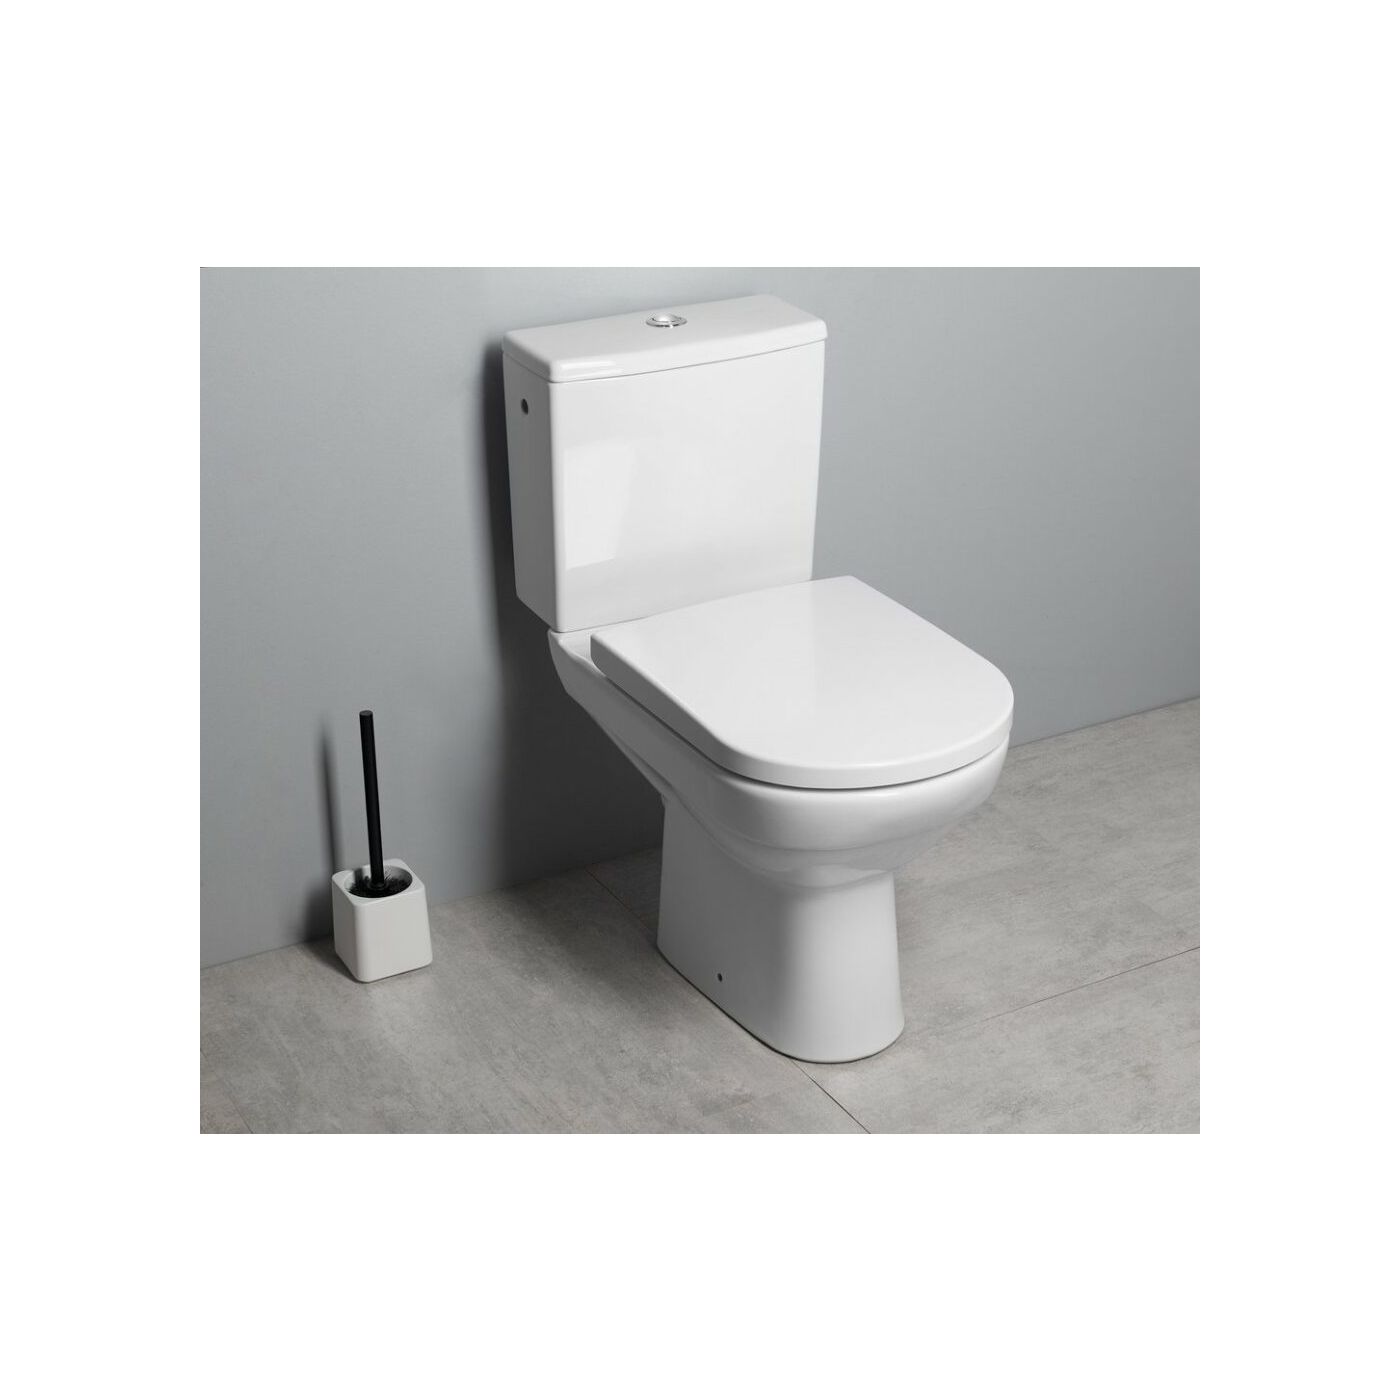 Sapho Behrens randloze toilet 36x67 wit